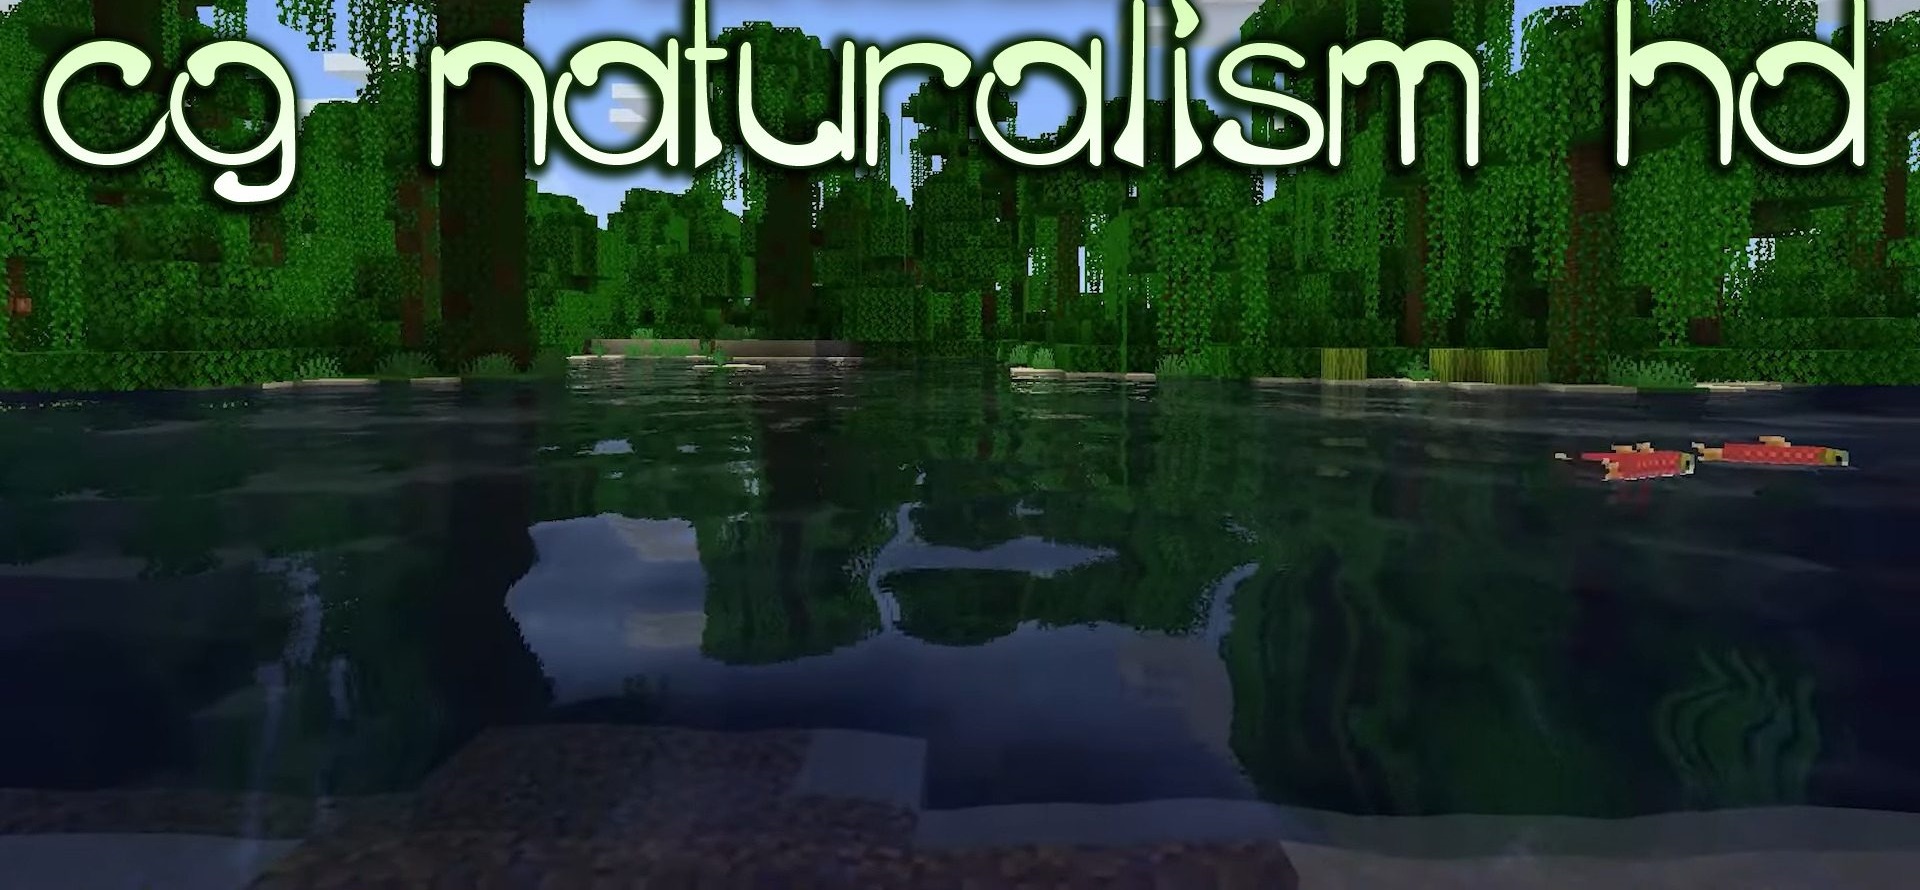 CG Naturalism HD screenshot 1